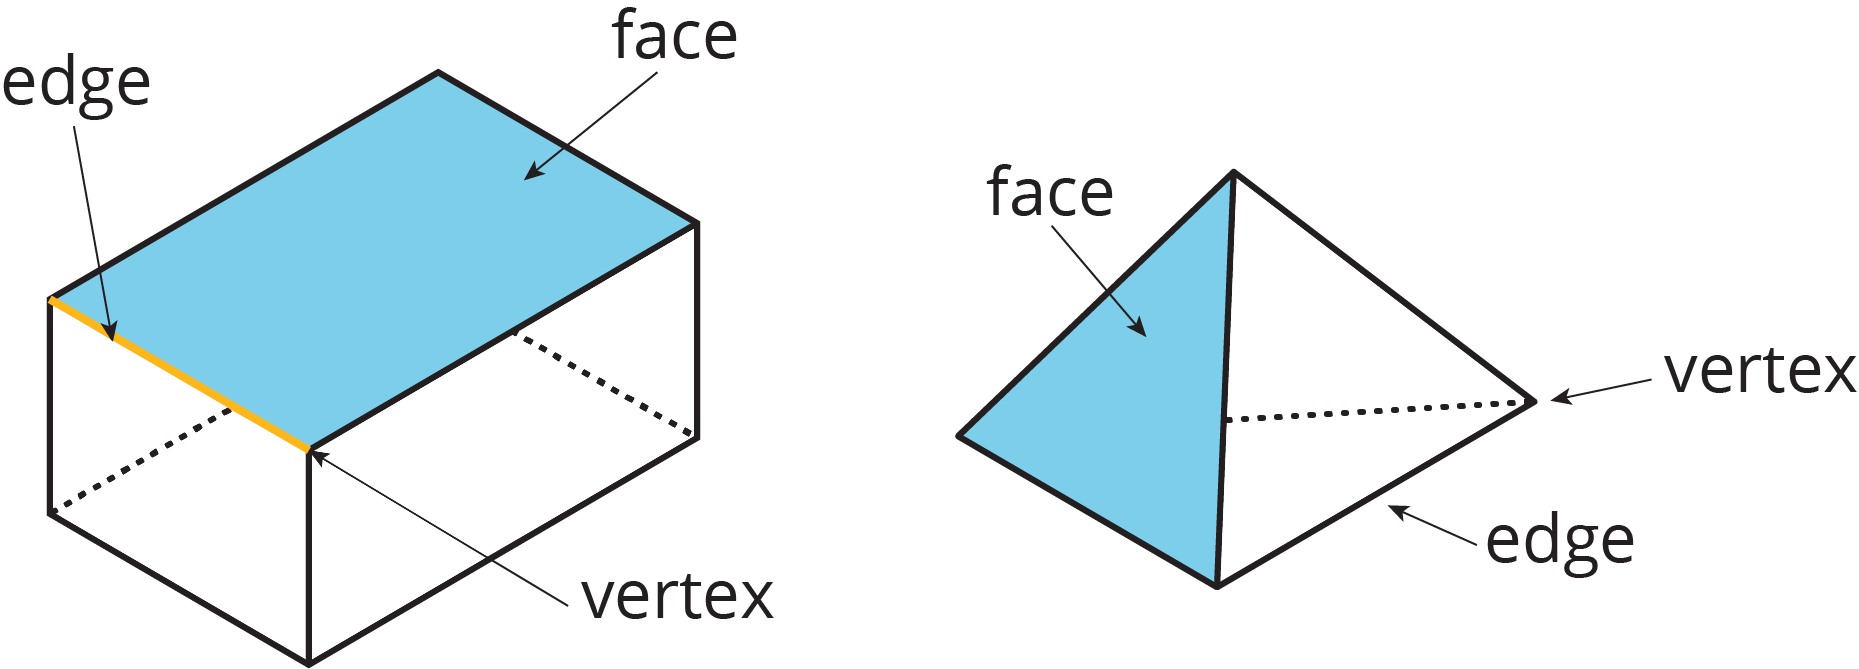 Polyhedra Edge Face Vertex 